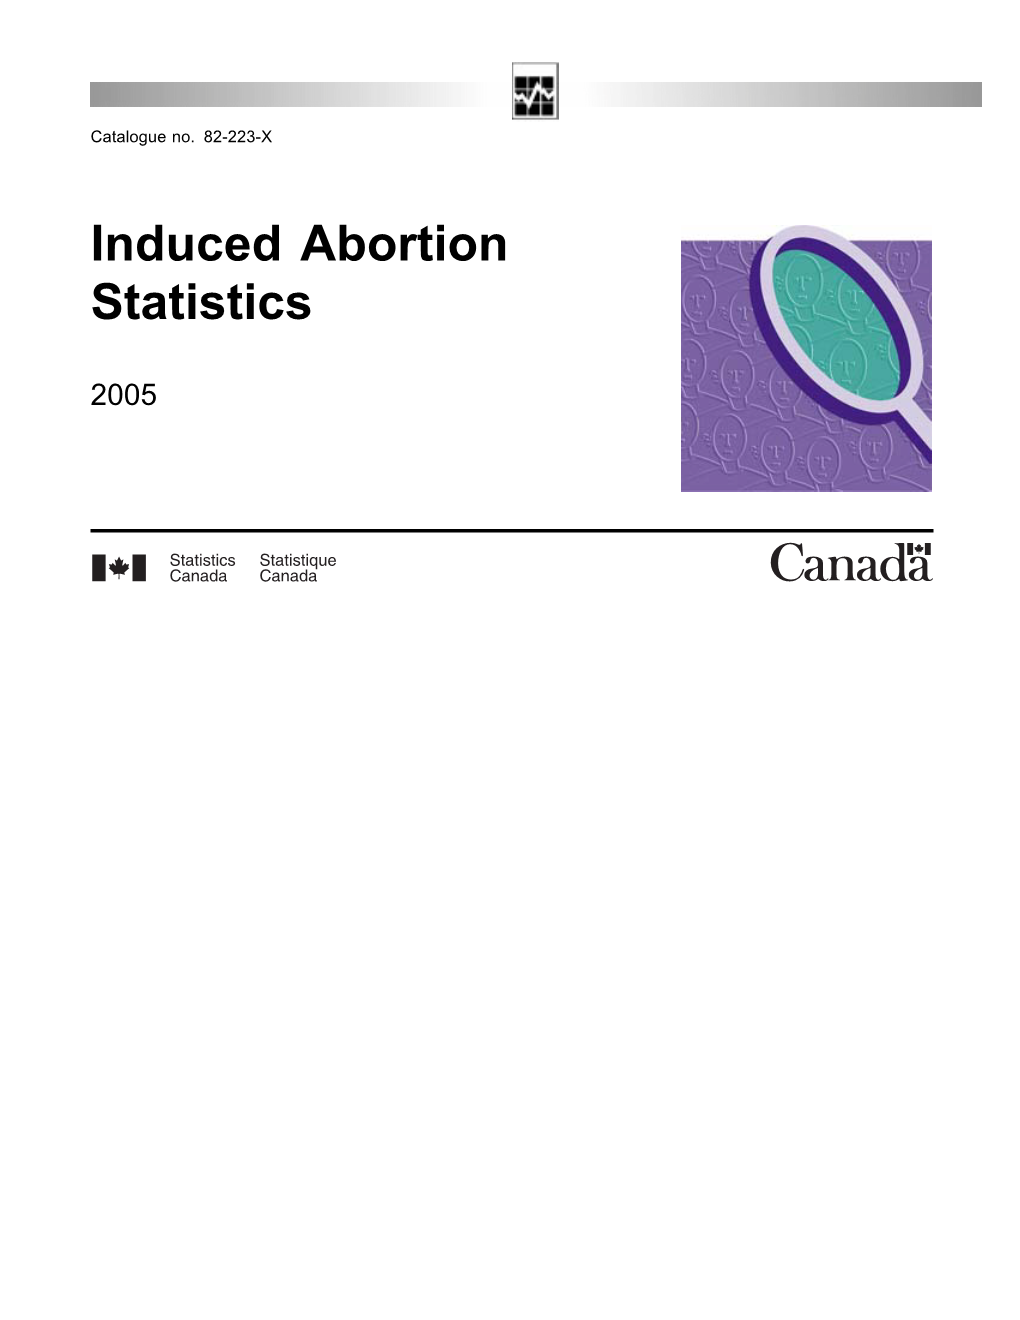 Induced Abortion Statistics